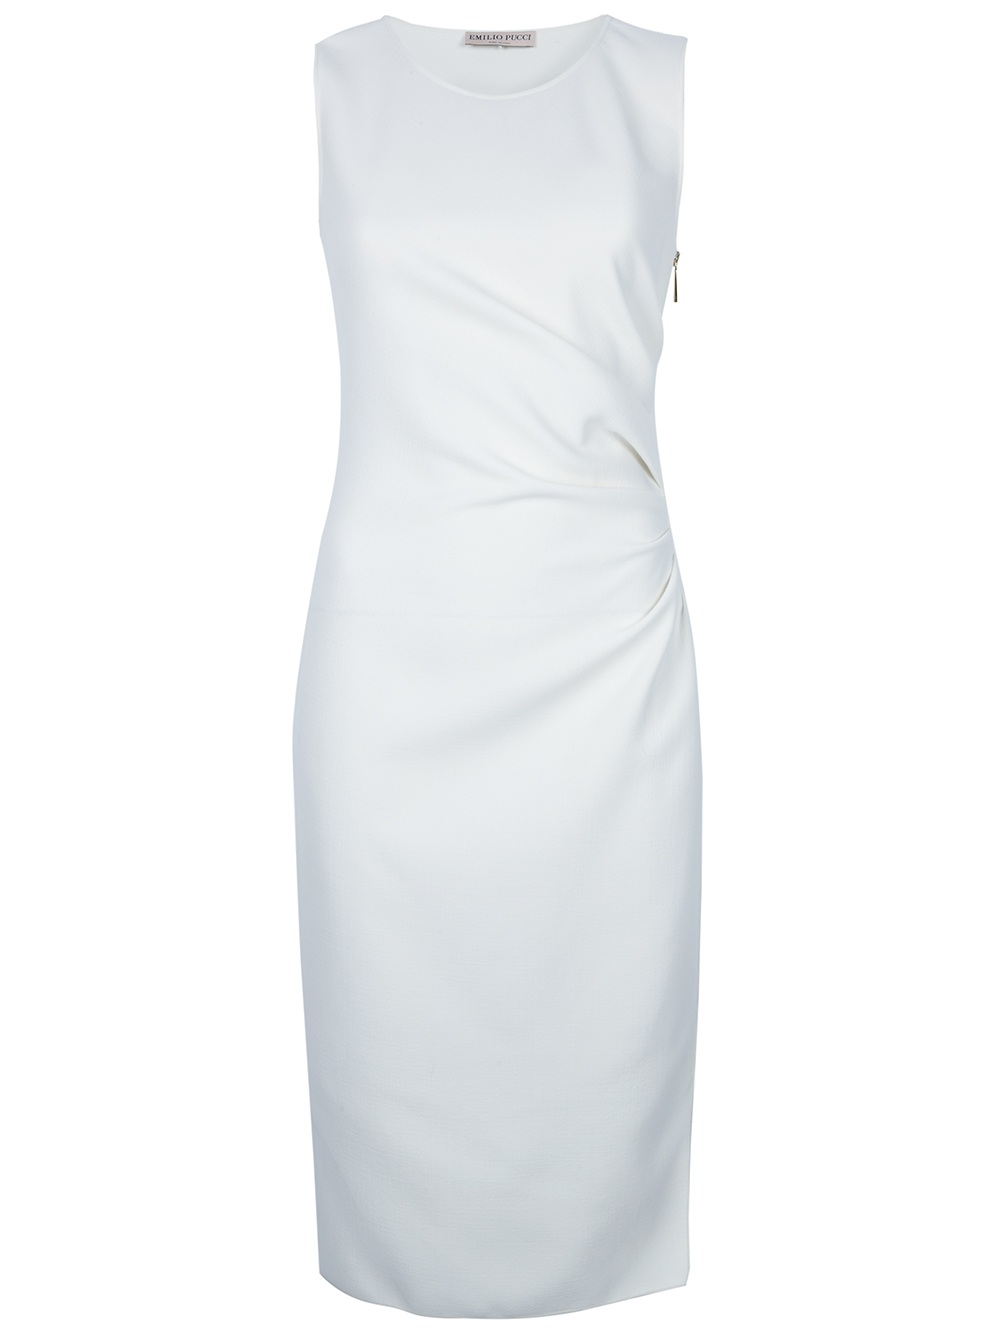 Emilio Pucci Zip Crepe Dress in White | Lyst